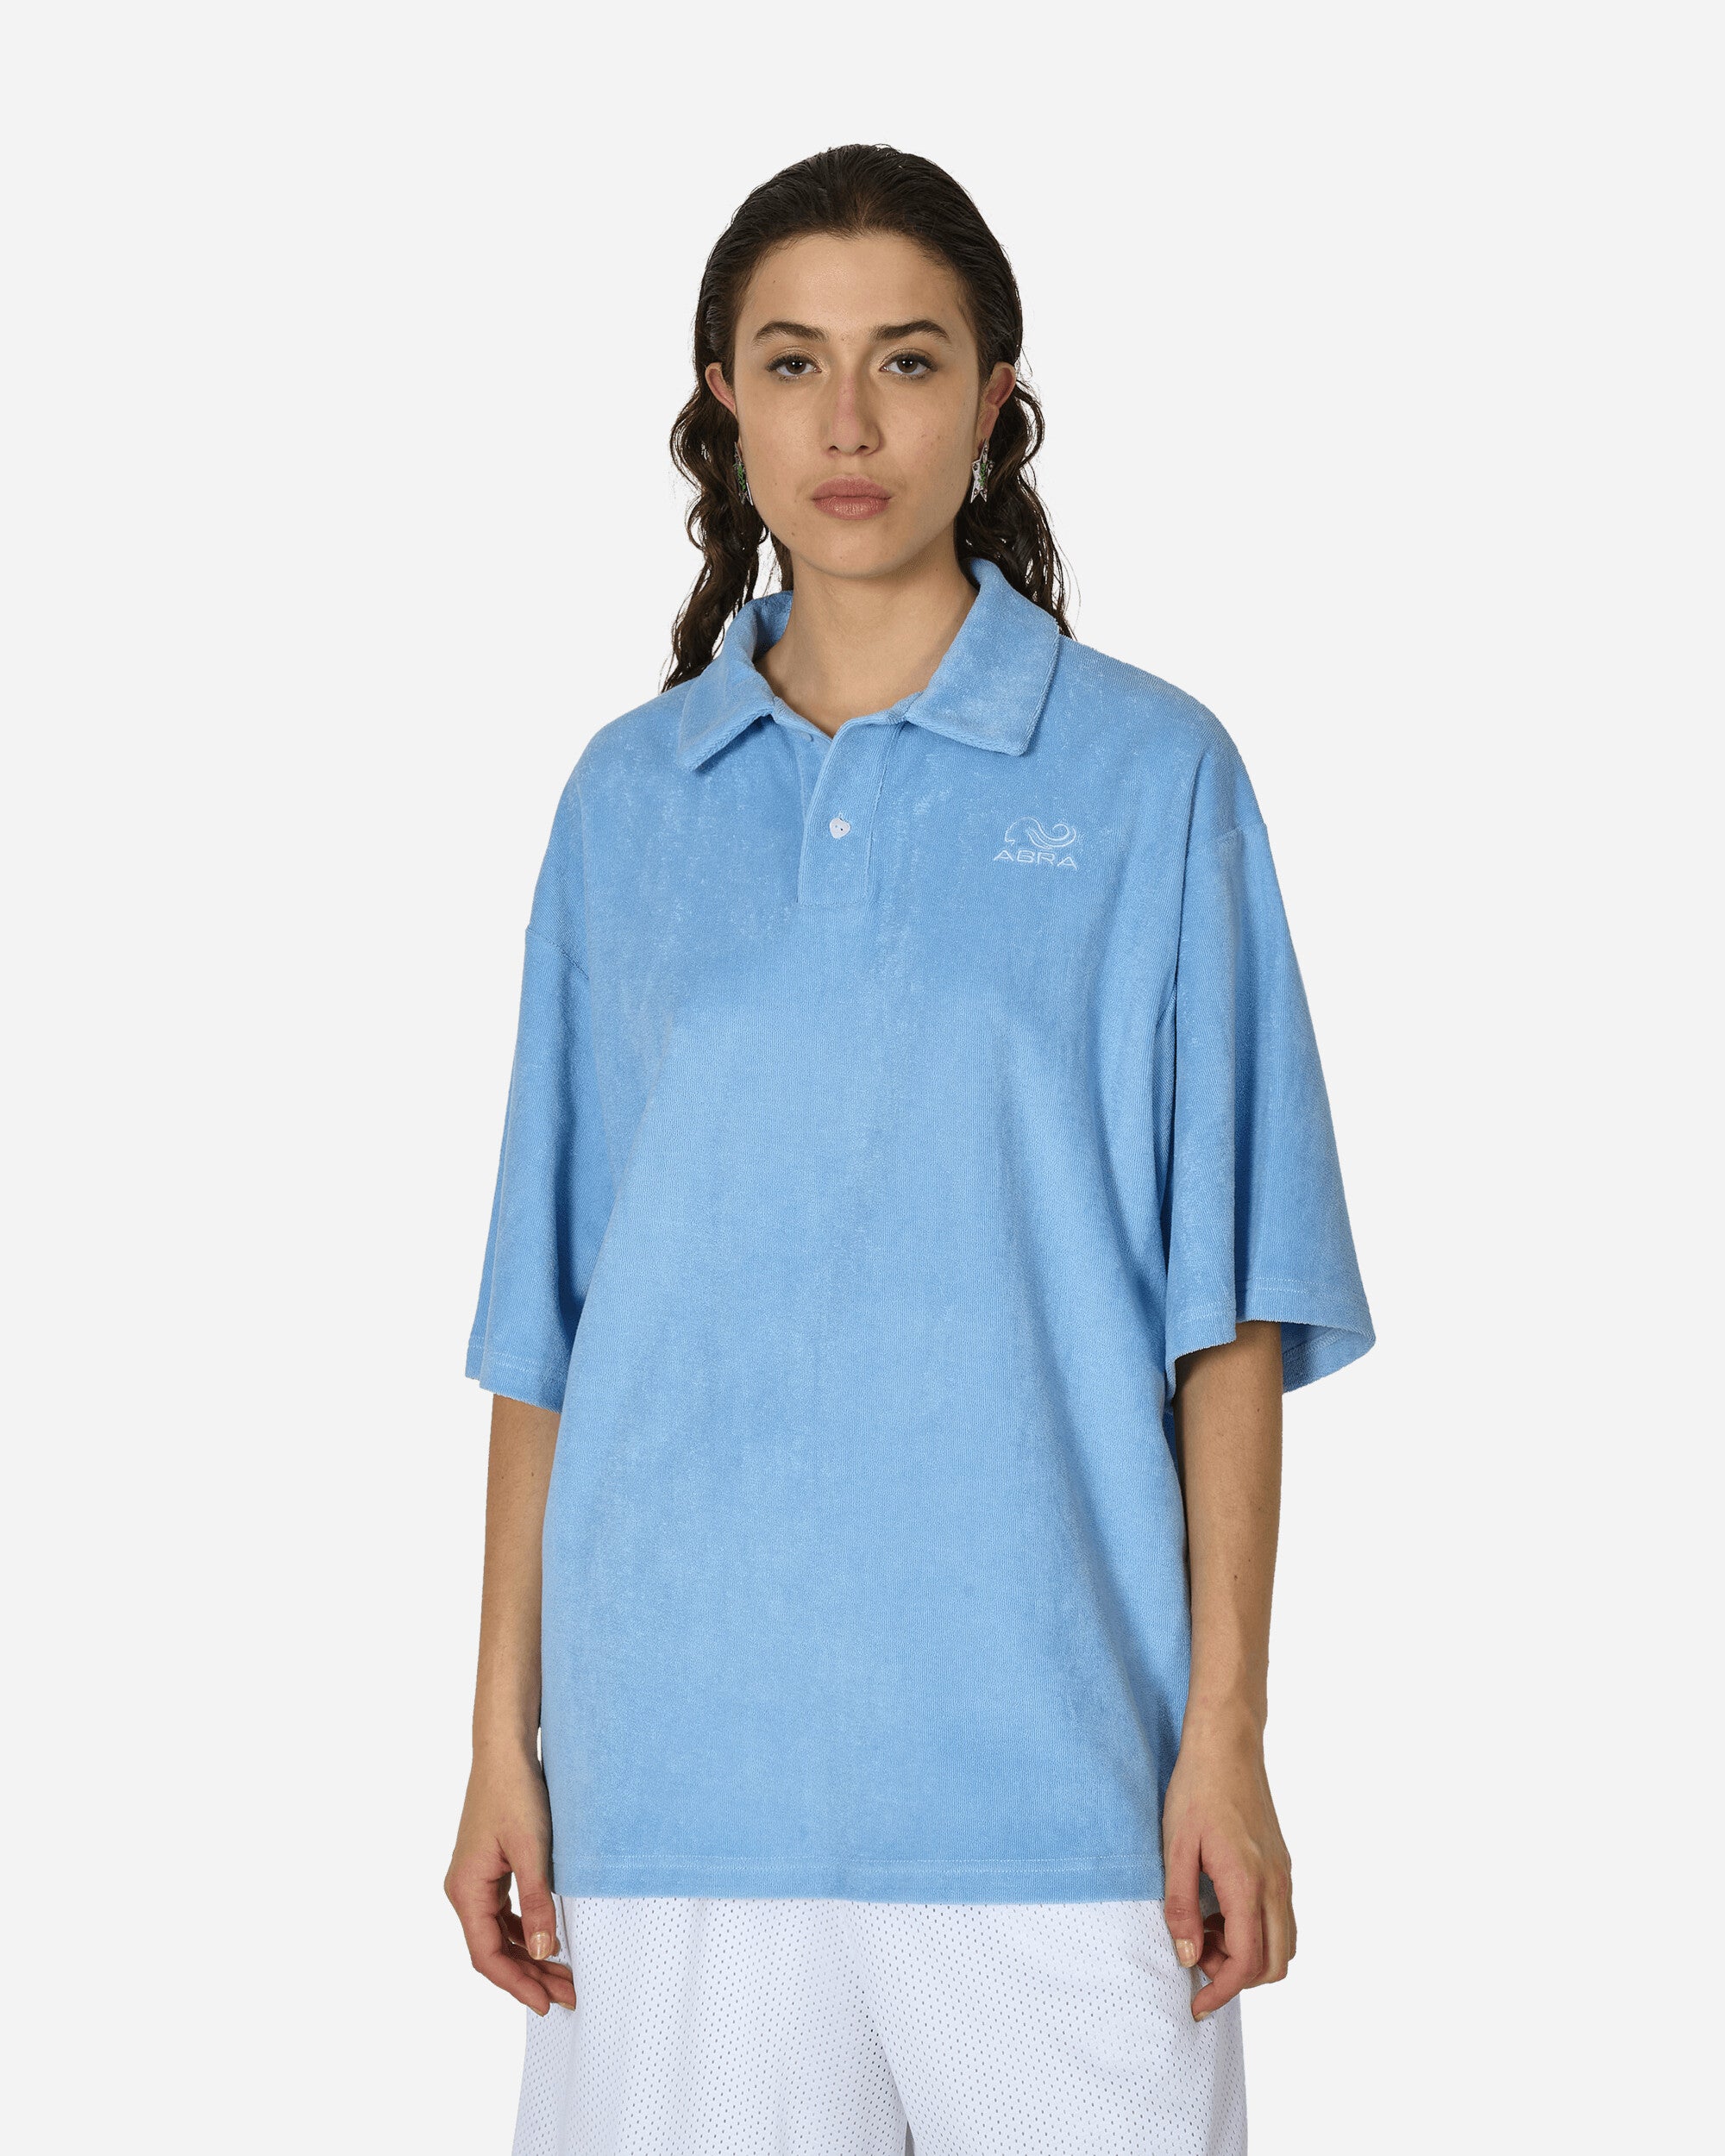 Abra Wmns Towel Polo Blue T-Shirts Polo CSP20 BLUE